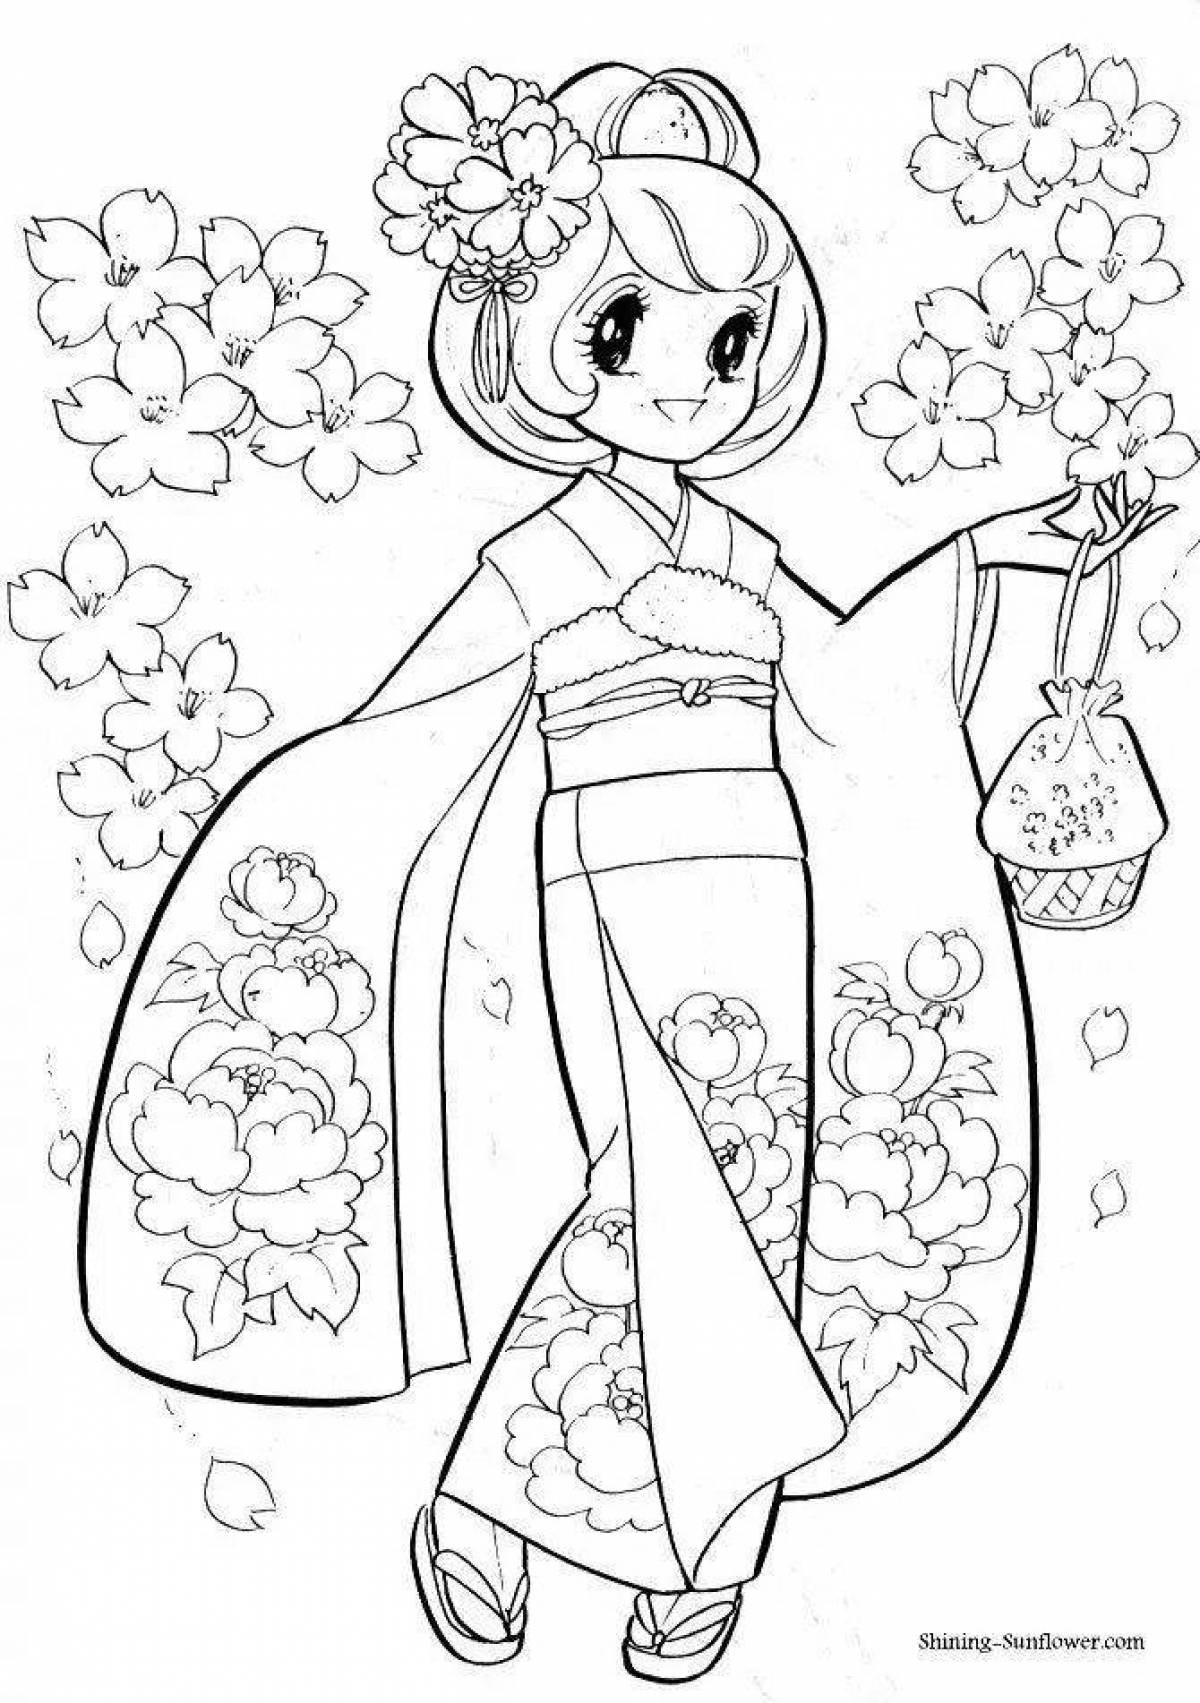 Dazzling kimono coloring page